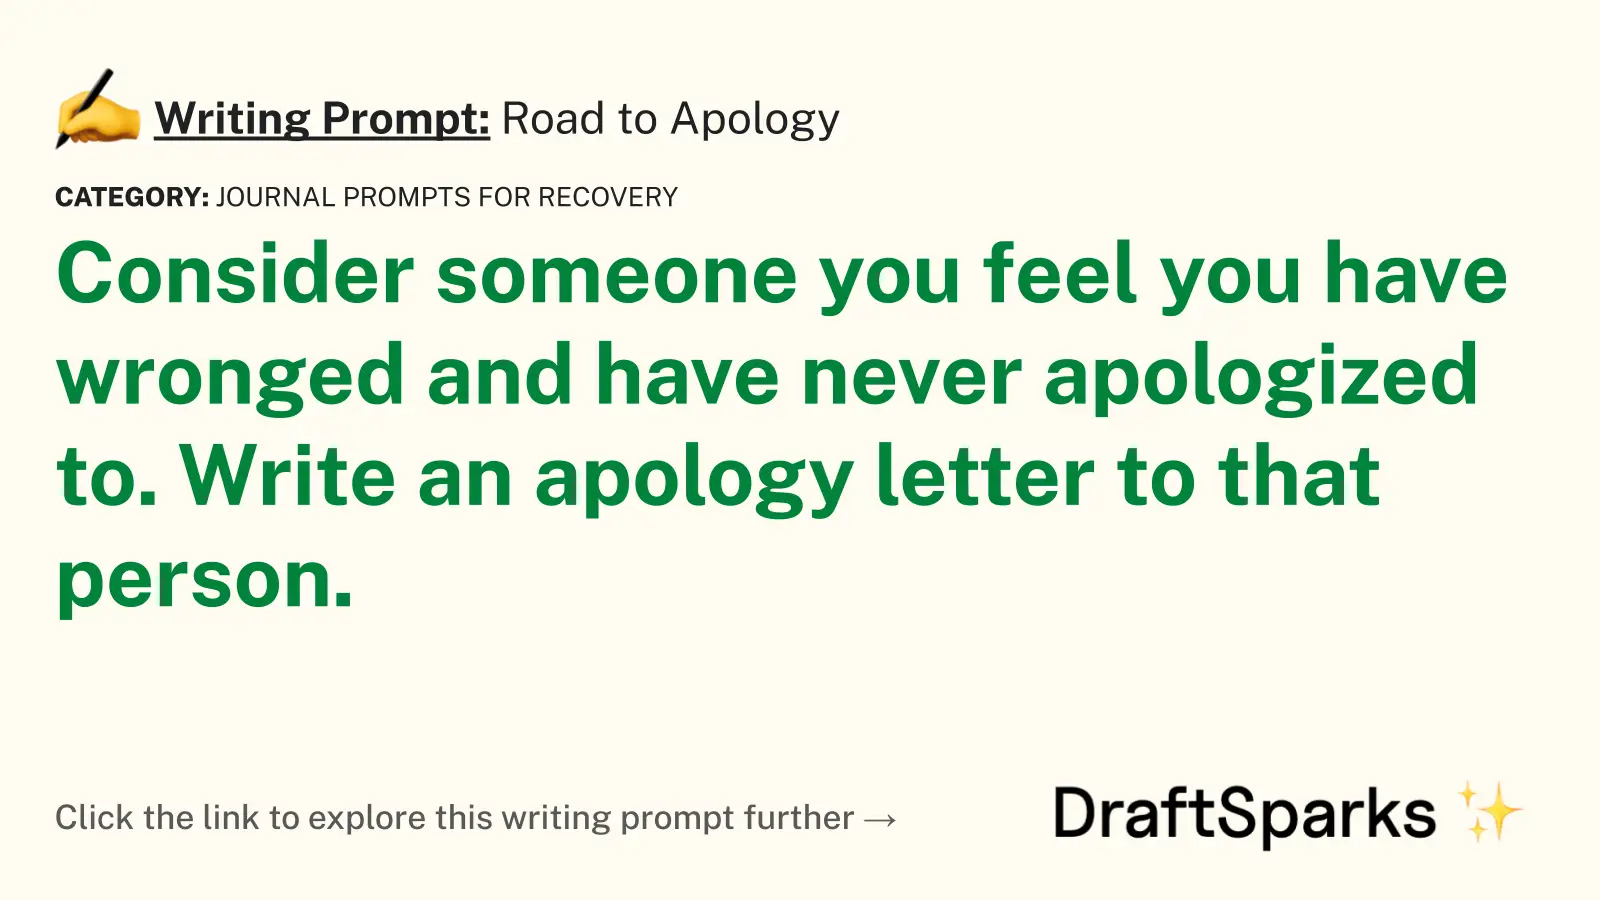 Road to Apology